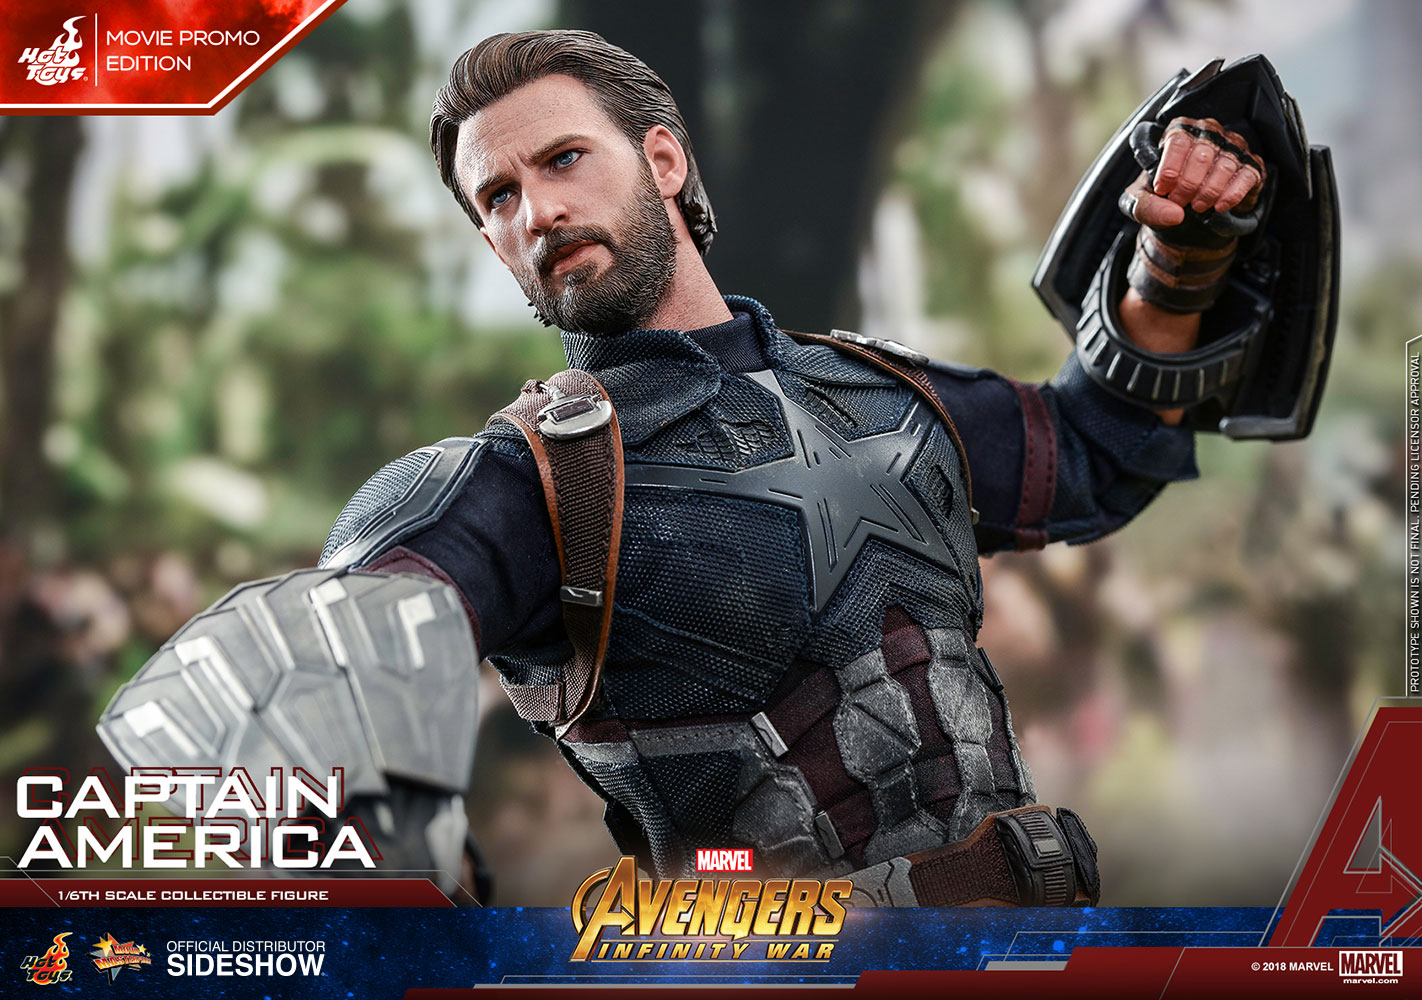 marvel-avengers-infinity-war-captain-america-movie-promo-sixth-scale-figure-hot-toys-9034301-14